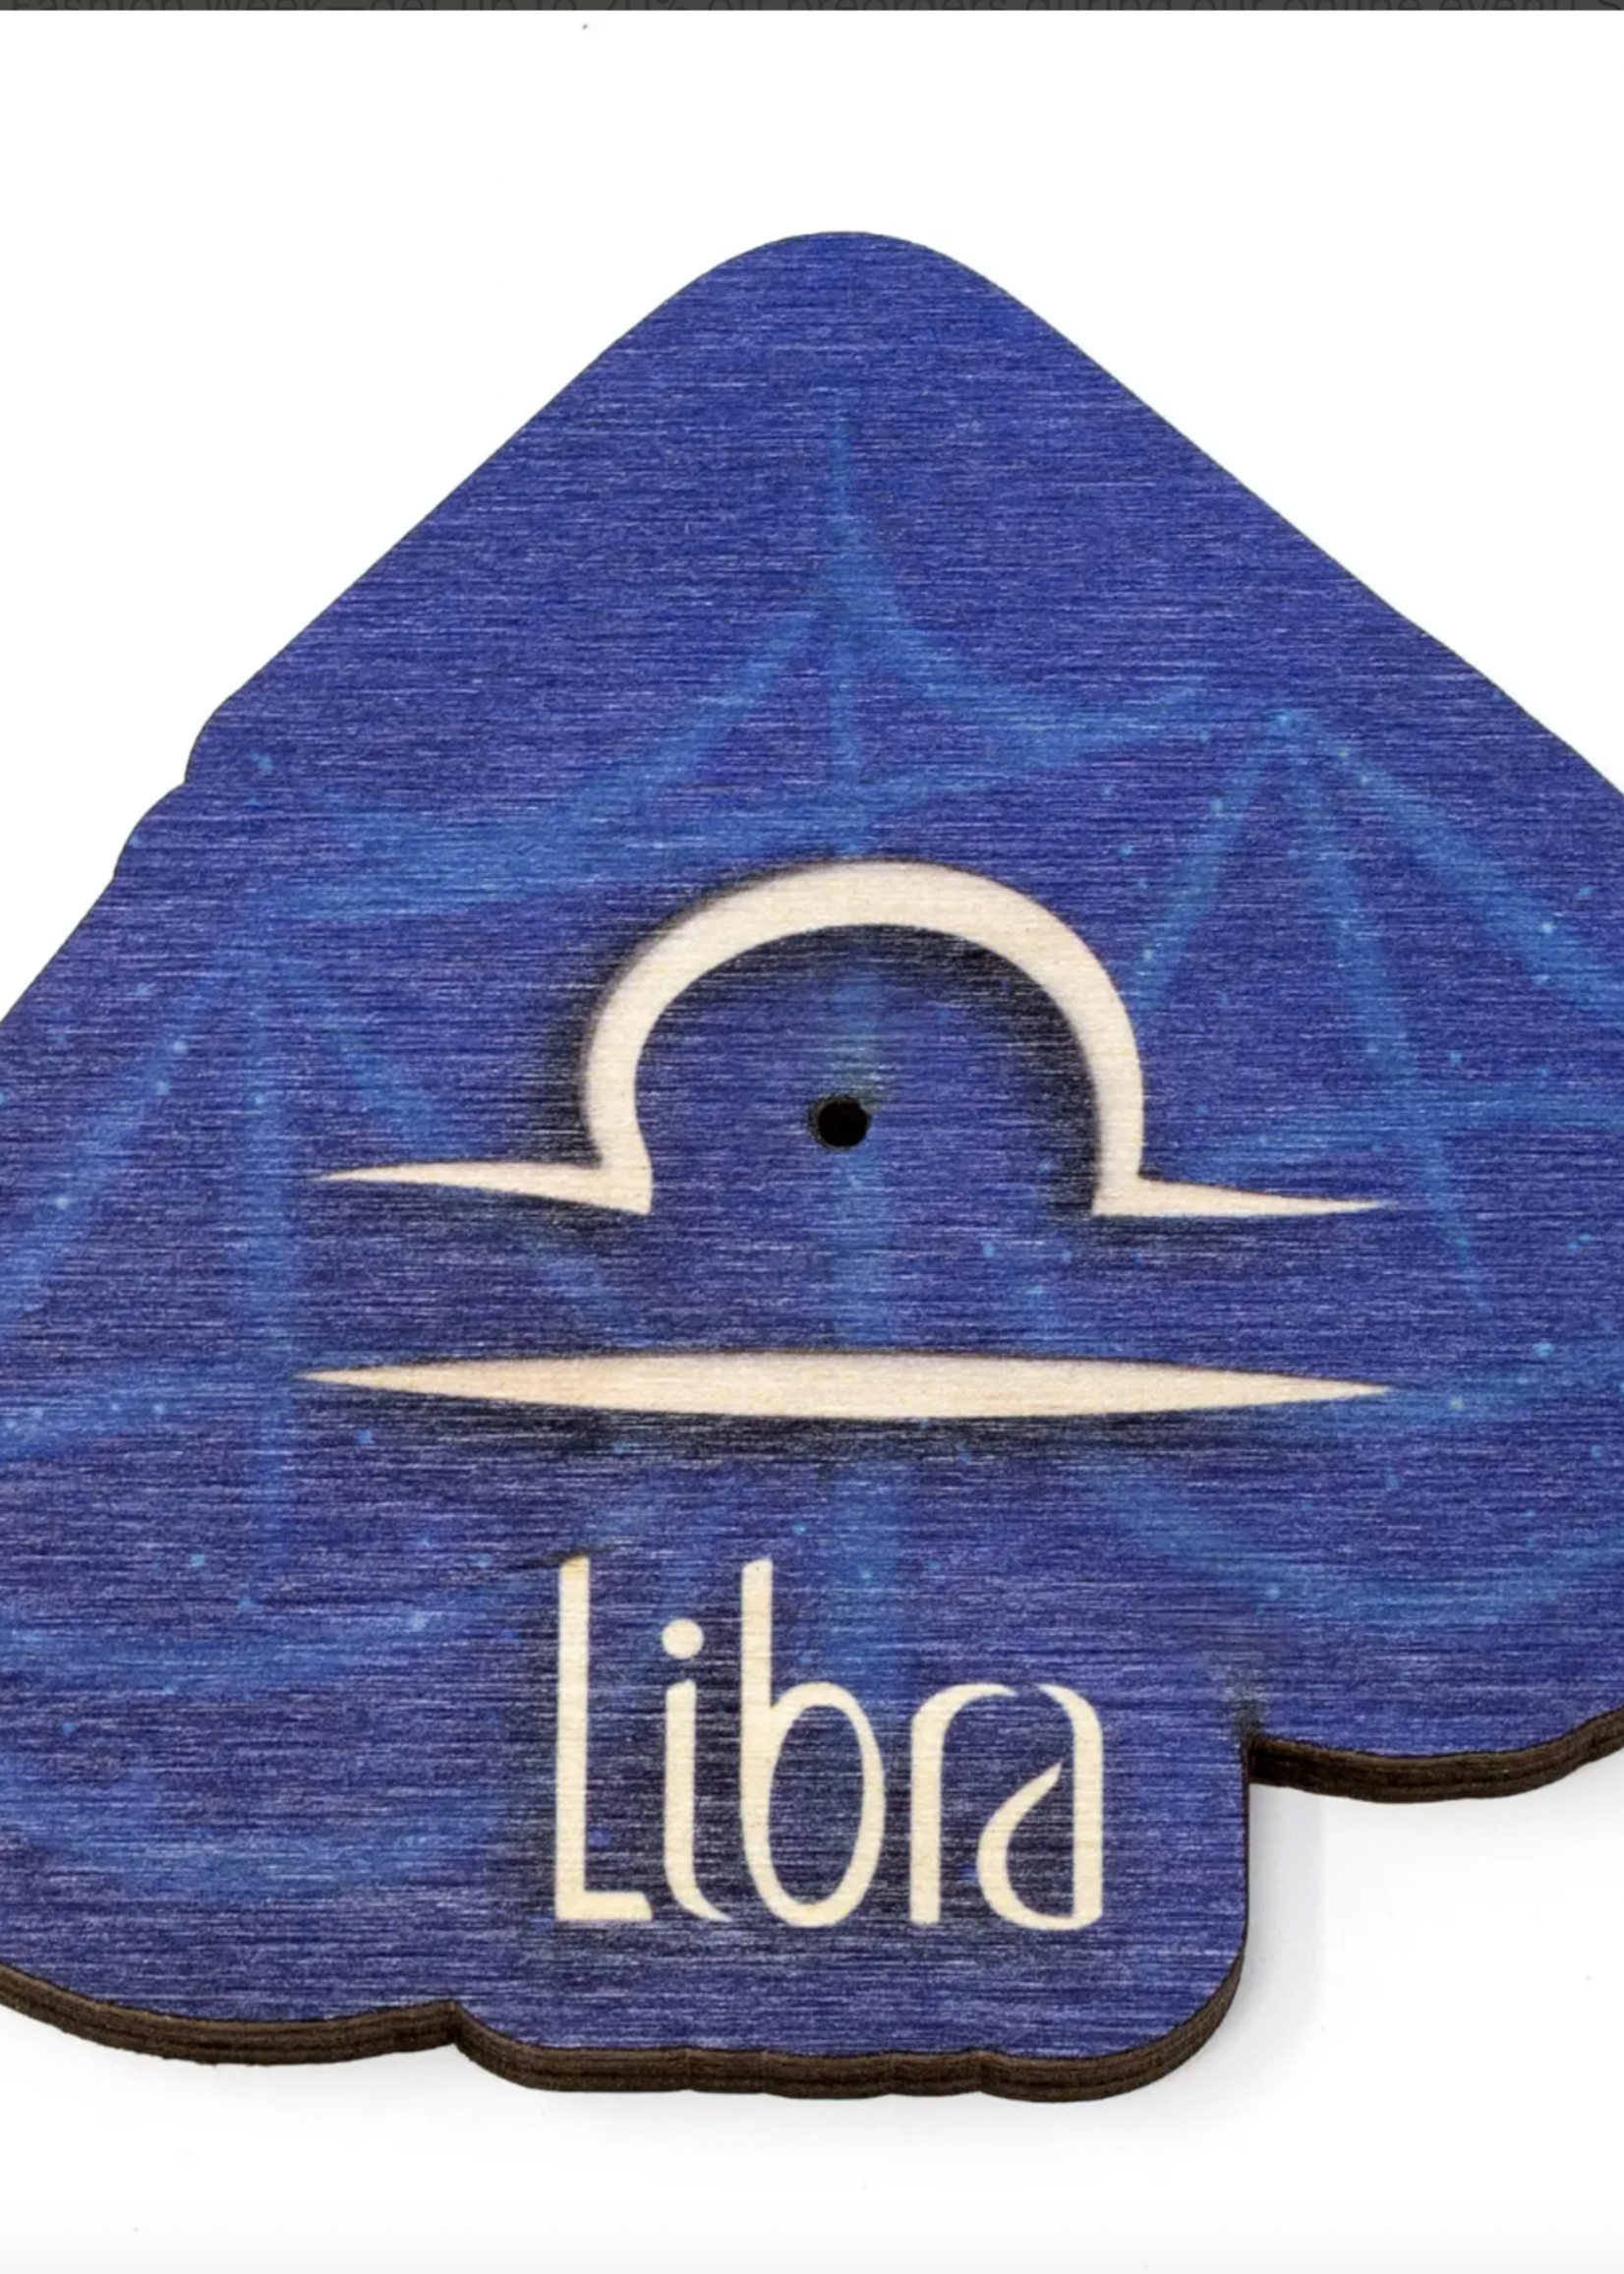 Most Amazing Libra Wooden Keychain